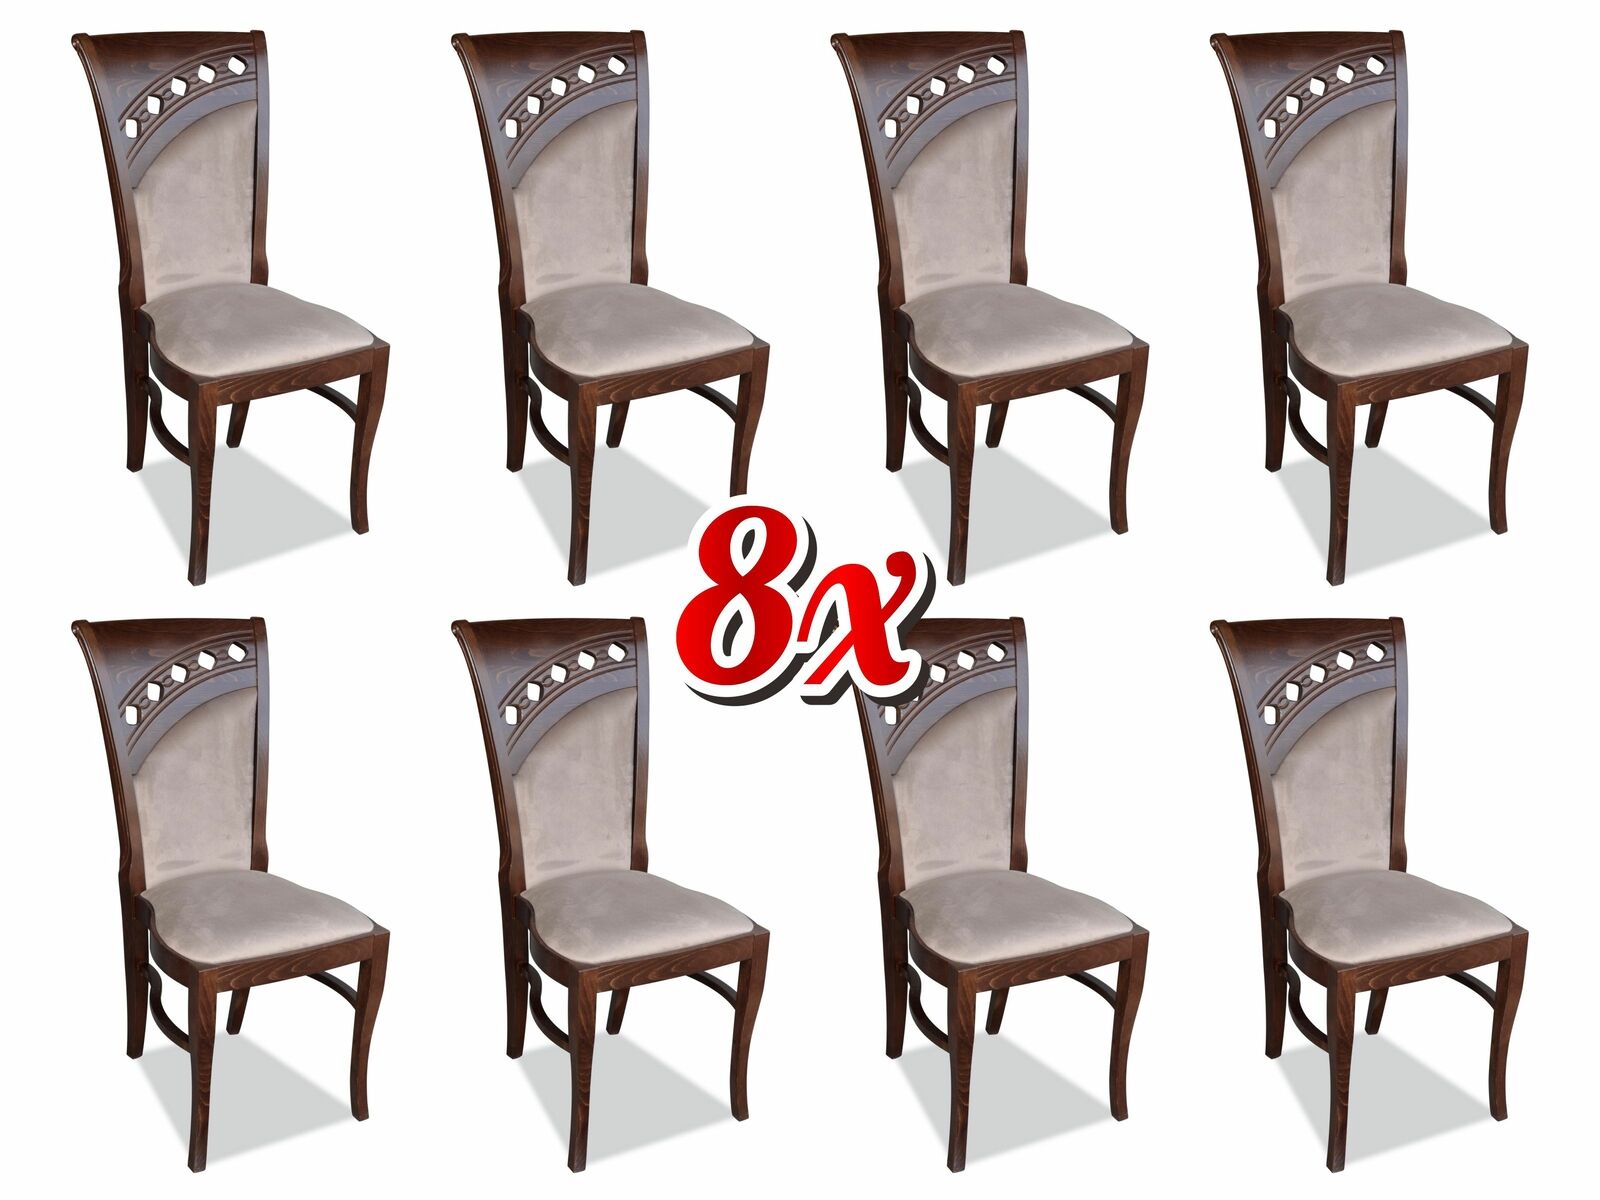 Gruppe Gastronomie Neu Esszimmer Restaurant Stuhl Design 8x Sessel Stühle Set